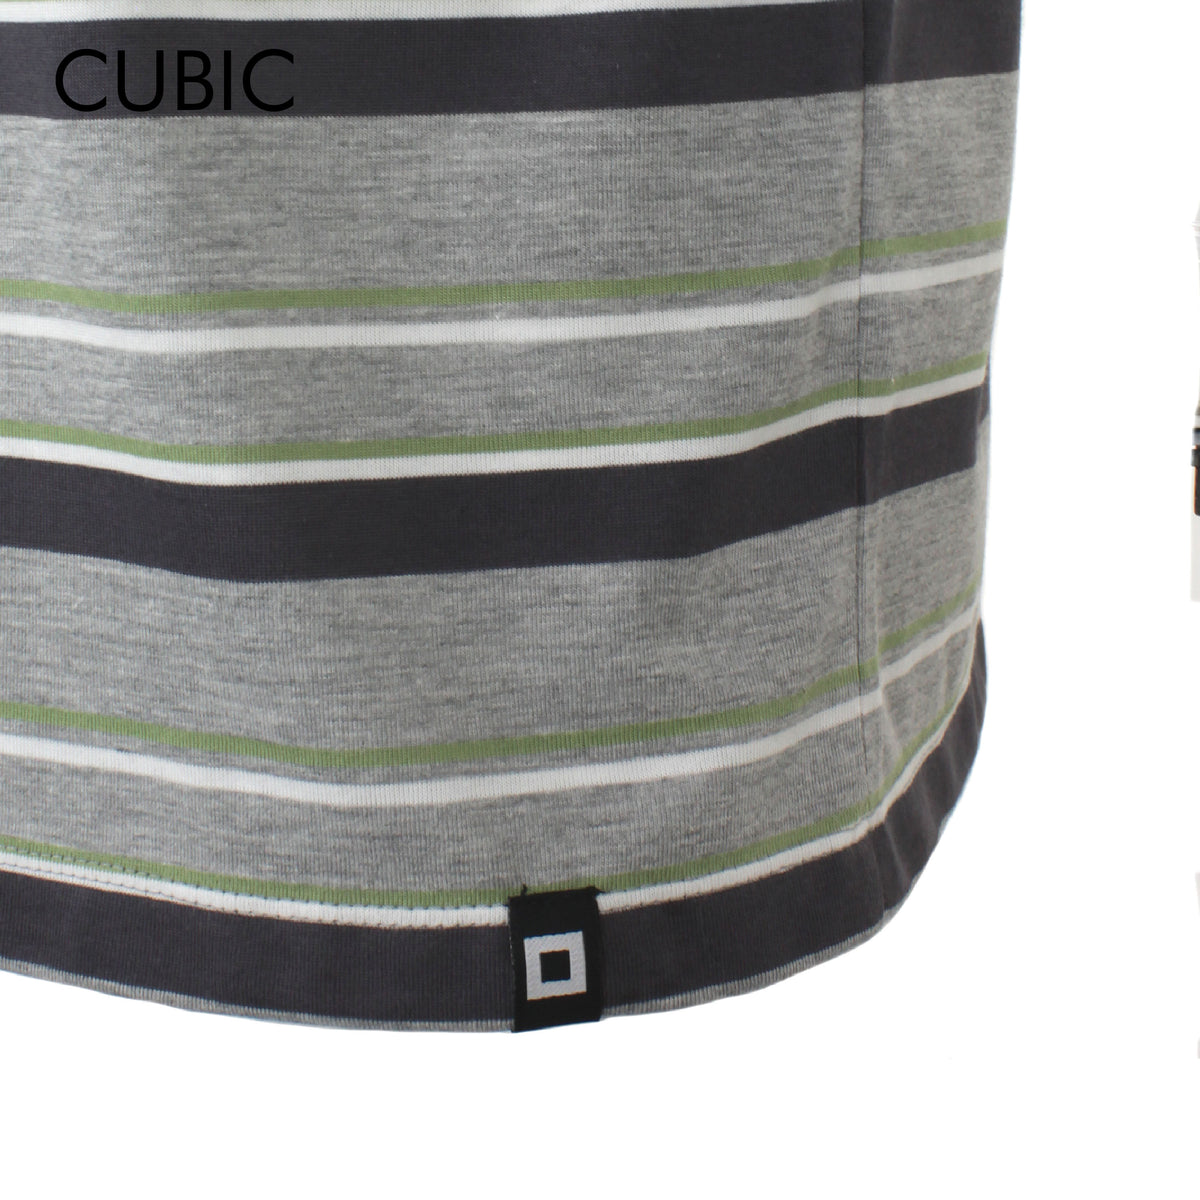 Cubic Mens Stripes  Polo Shirt Polo-shirt Collar Top Top for Men - CMS2356C